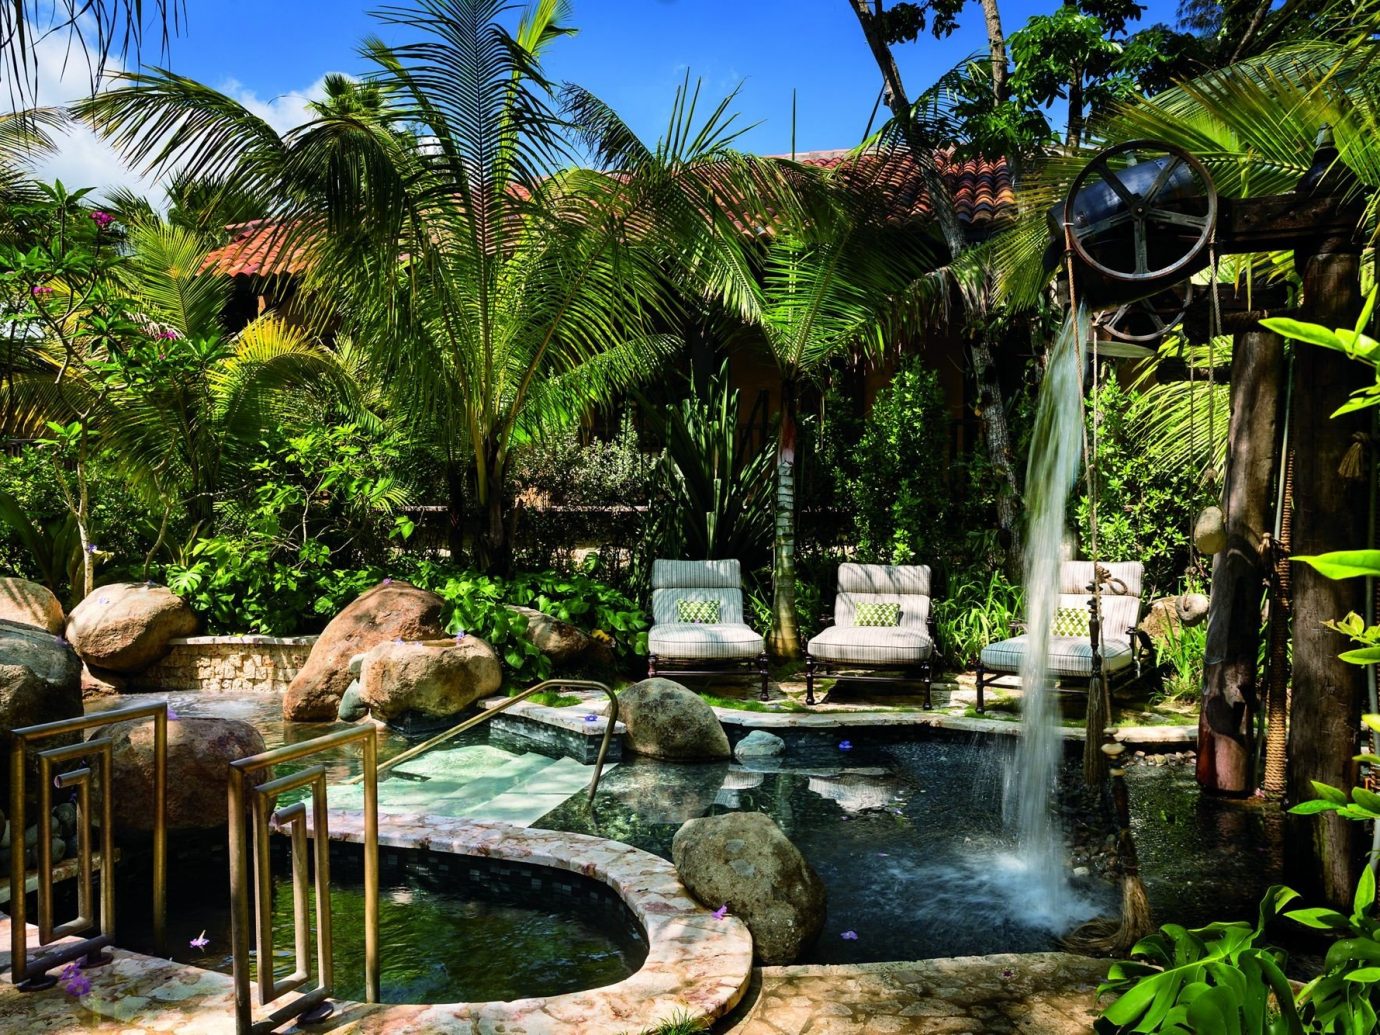 Hotels tree outdoor botany Jungle swimming pool Resort Garden arecales estate rainforest tropics plant backyard pond botanical garden flower palm